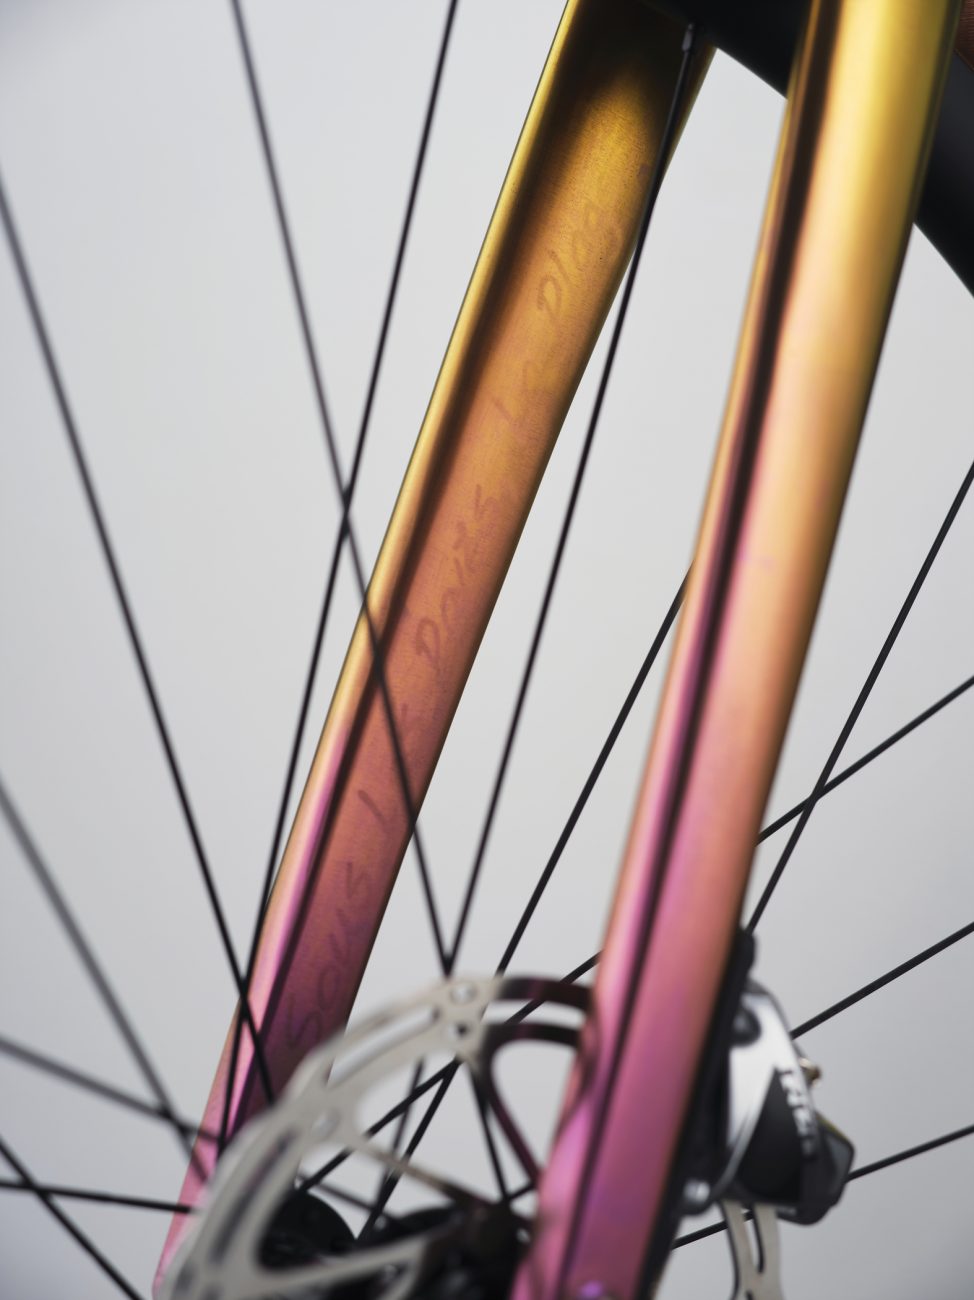 Detail of a Sturdy Cycles titanium bike